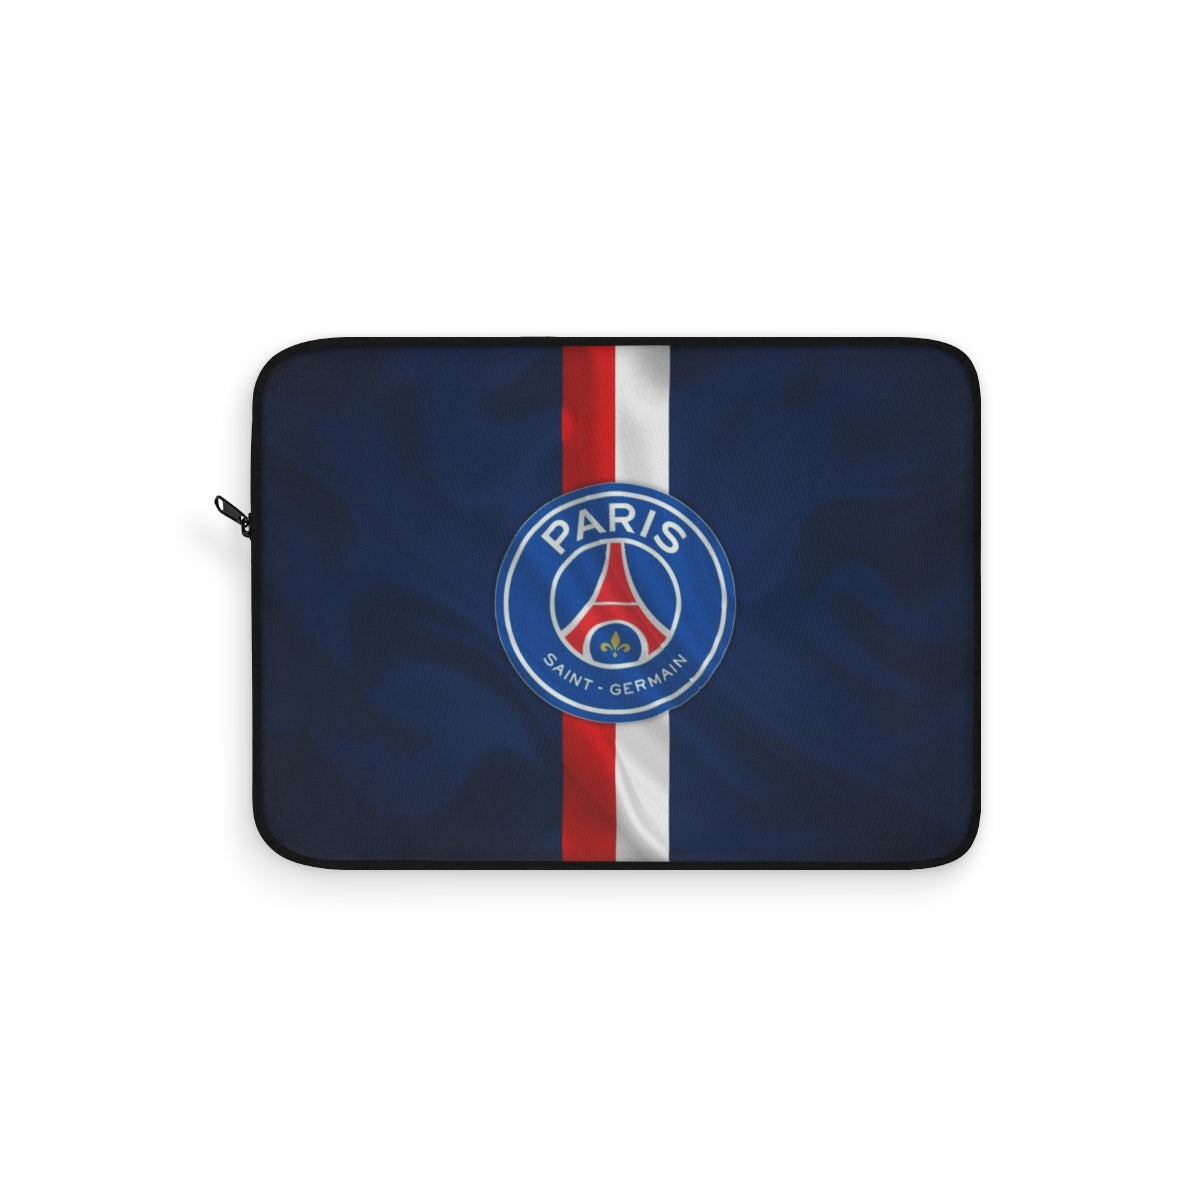 Paris Saint-Germain F.C. Laptop Sleeve